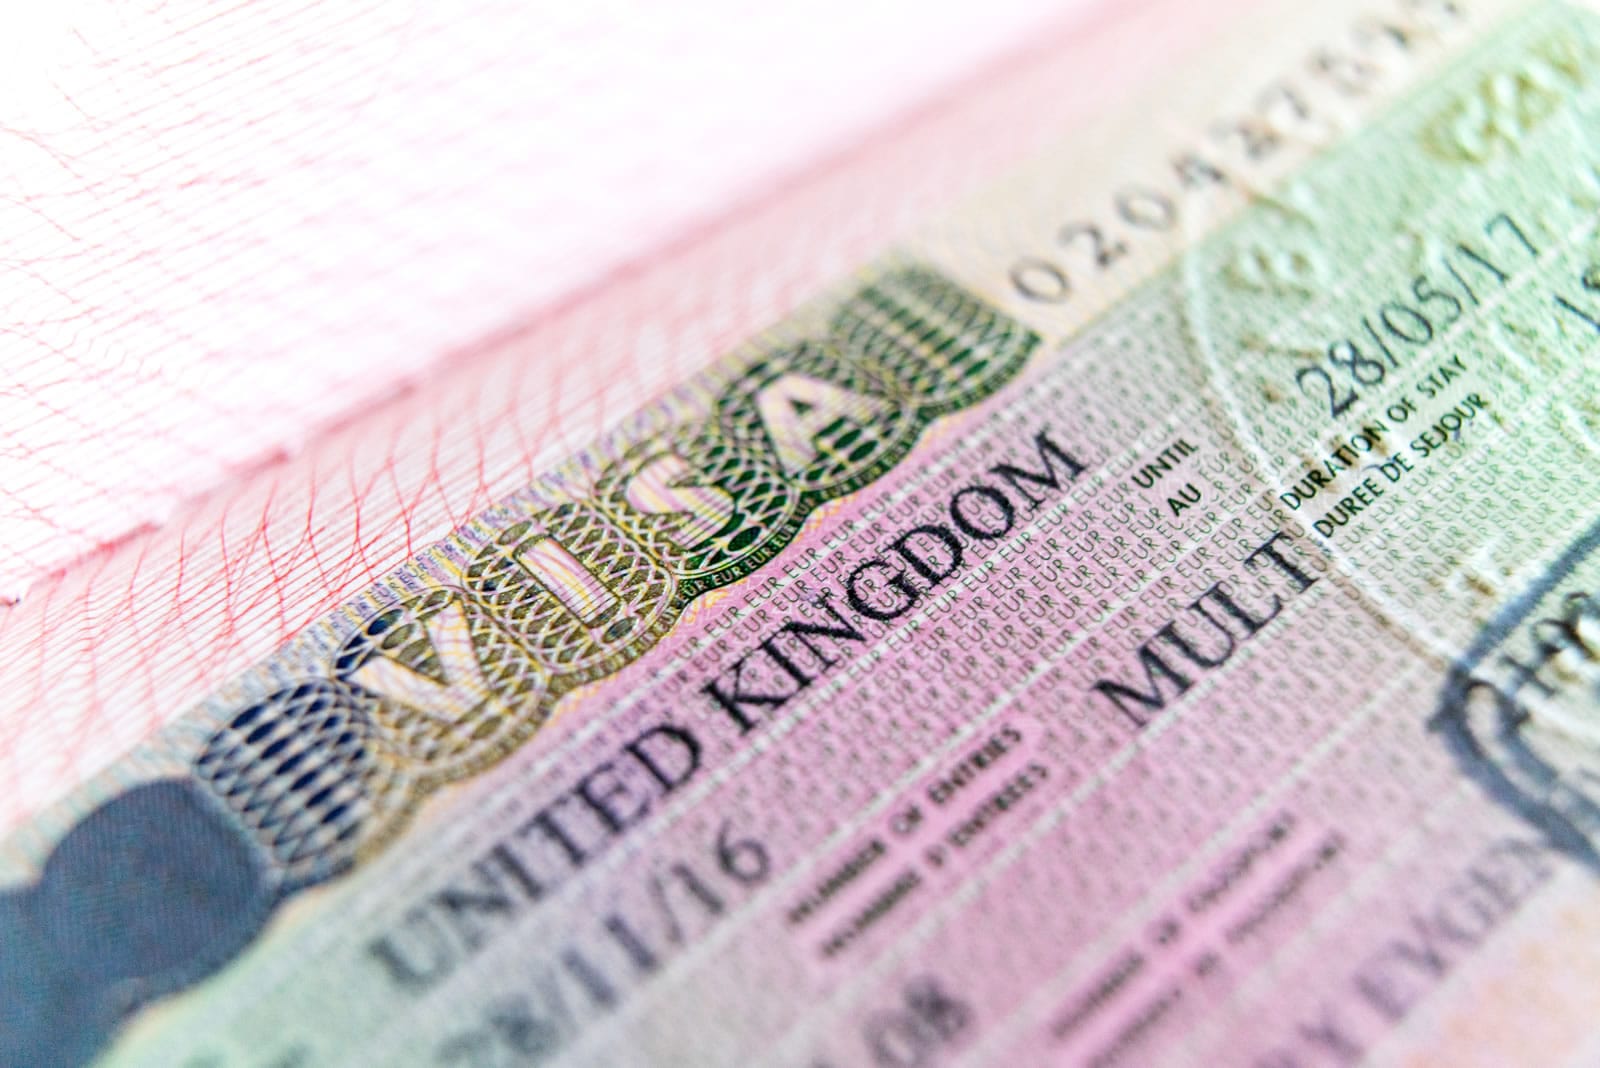 Close up of UK visa in passport